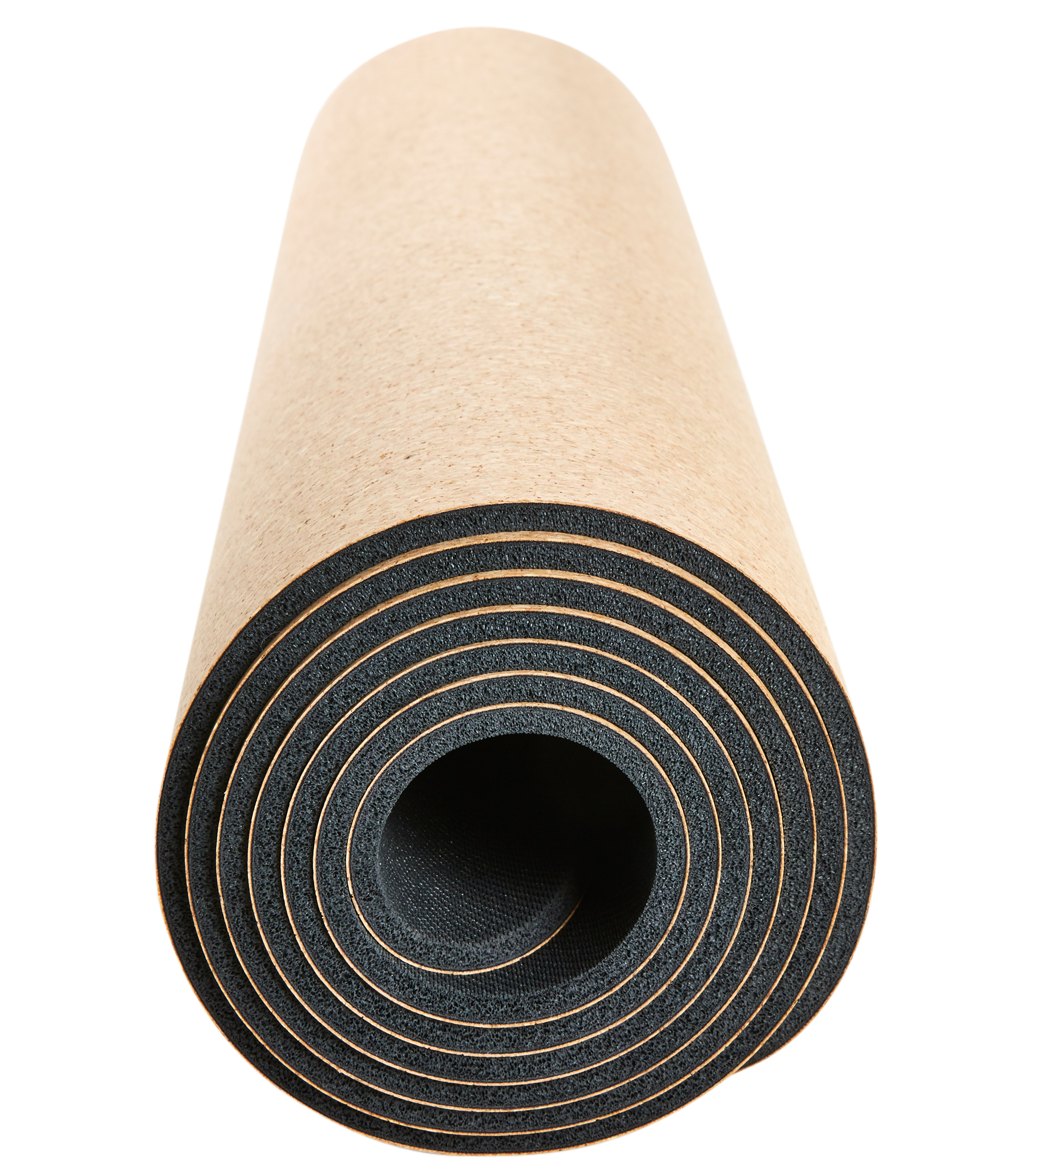 Performance Cork Yoga Mat (5mm)